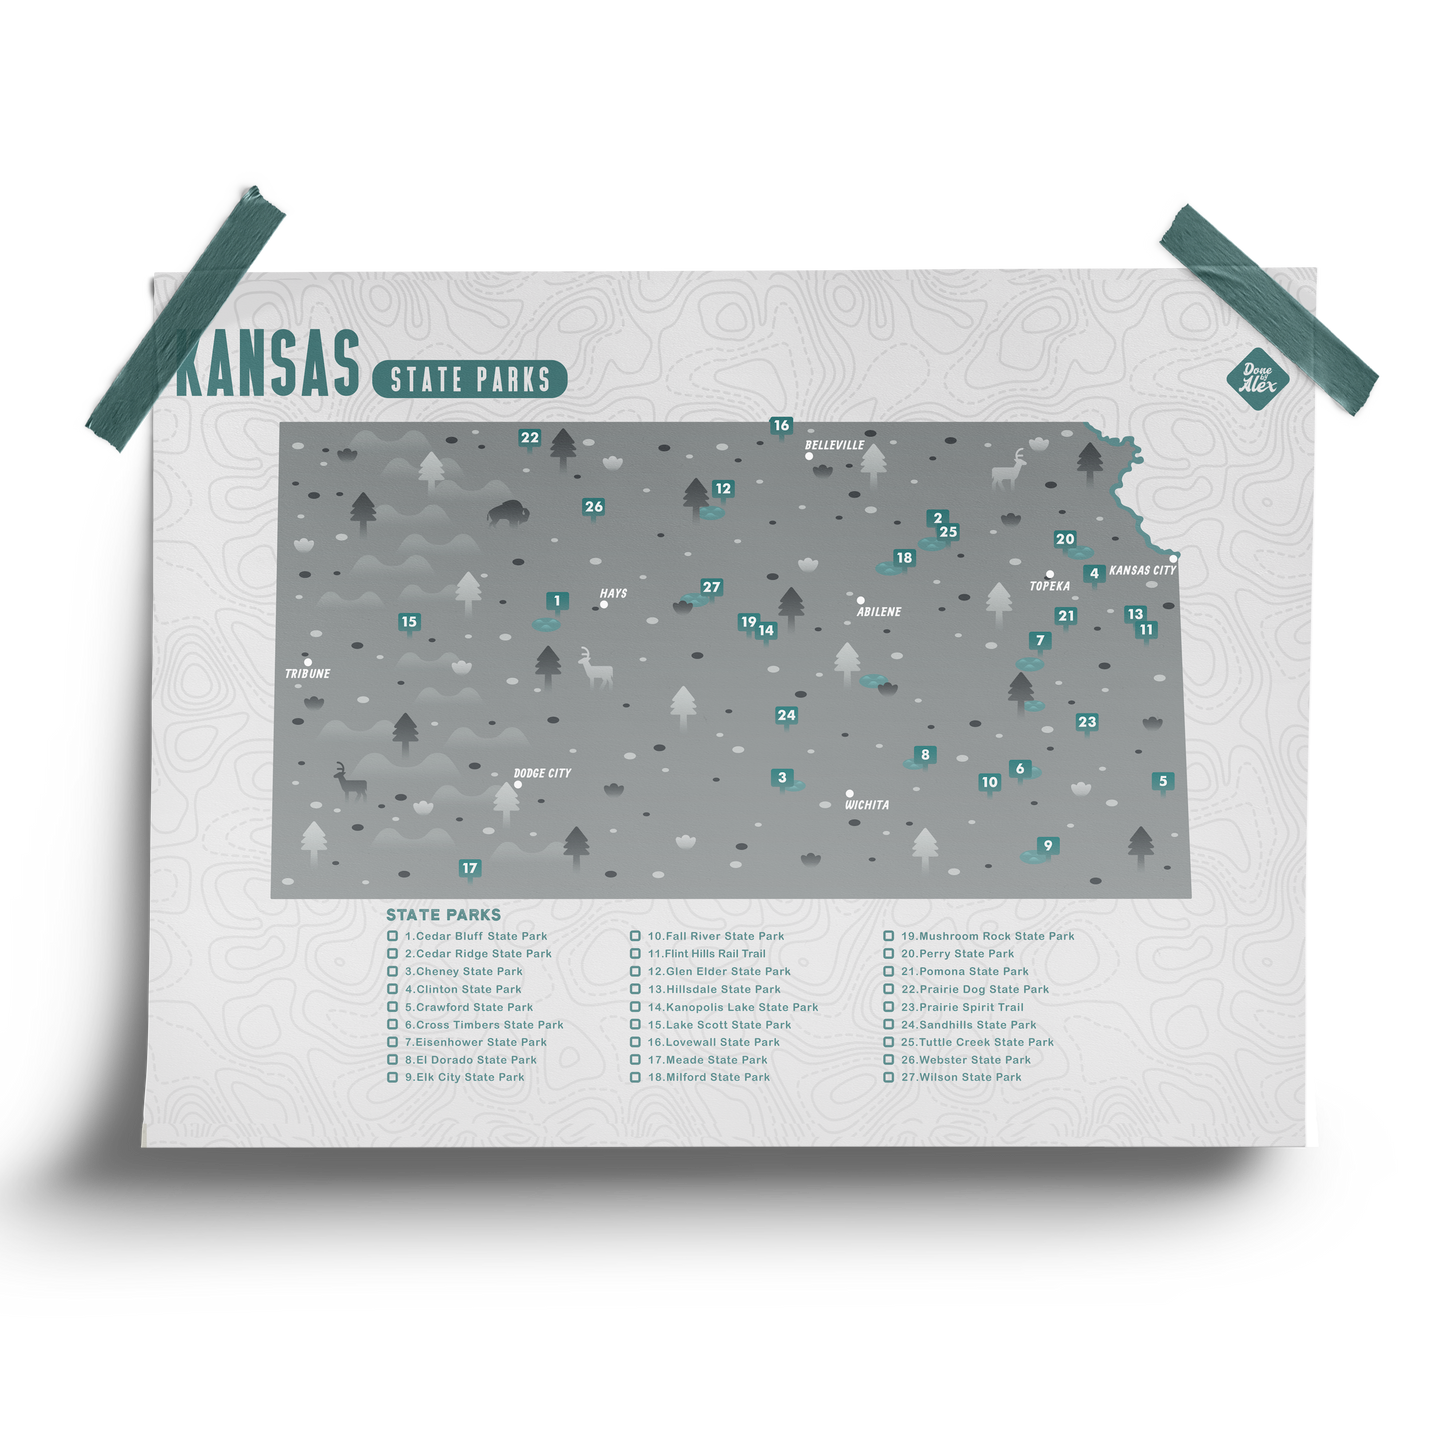 Kansas State Park Map - Checklist